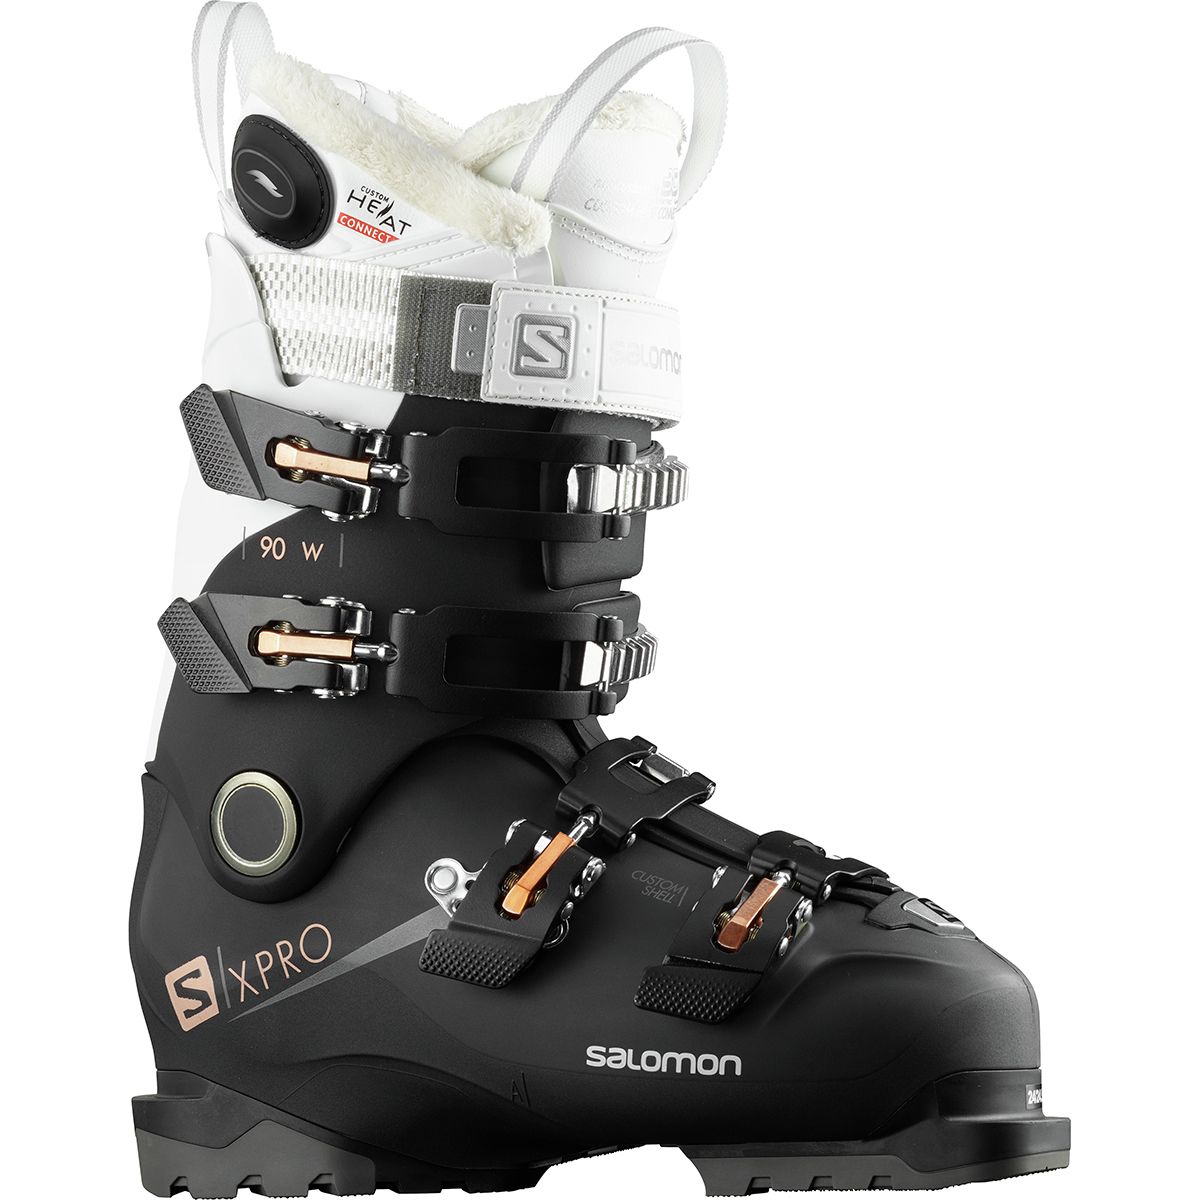 Salomon Pro 90W Custom Ski Boot - Ski